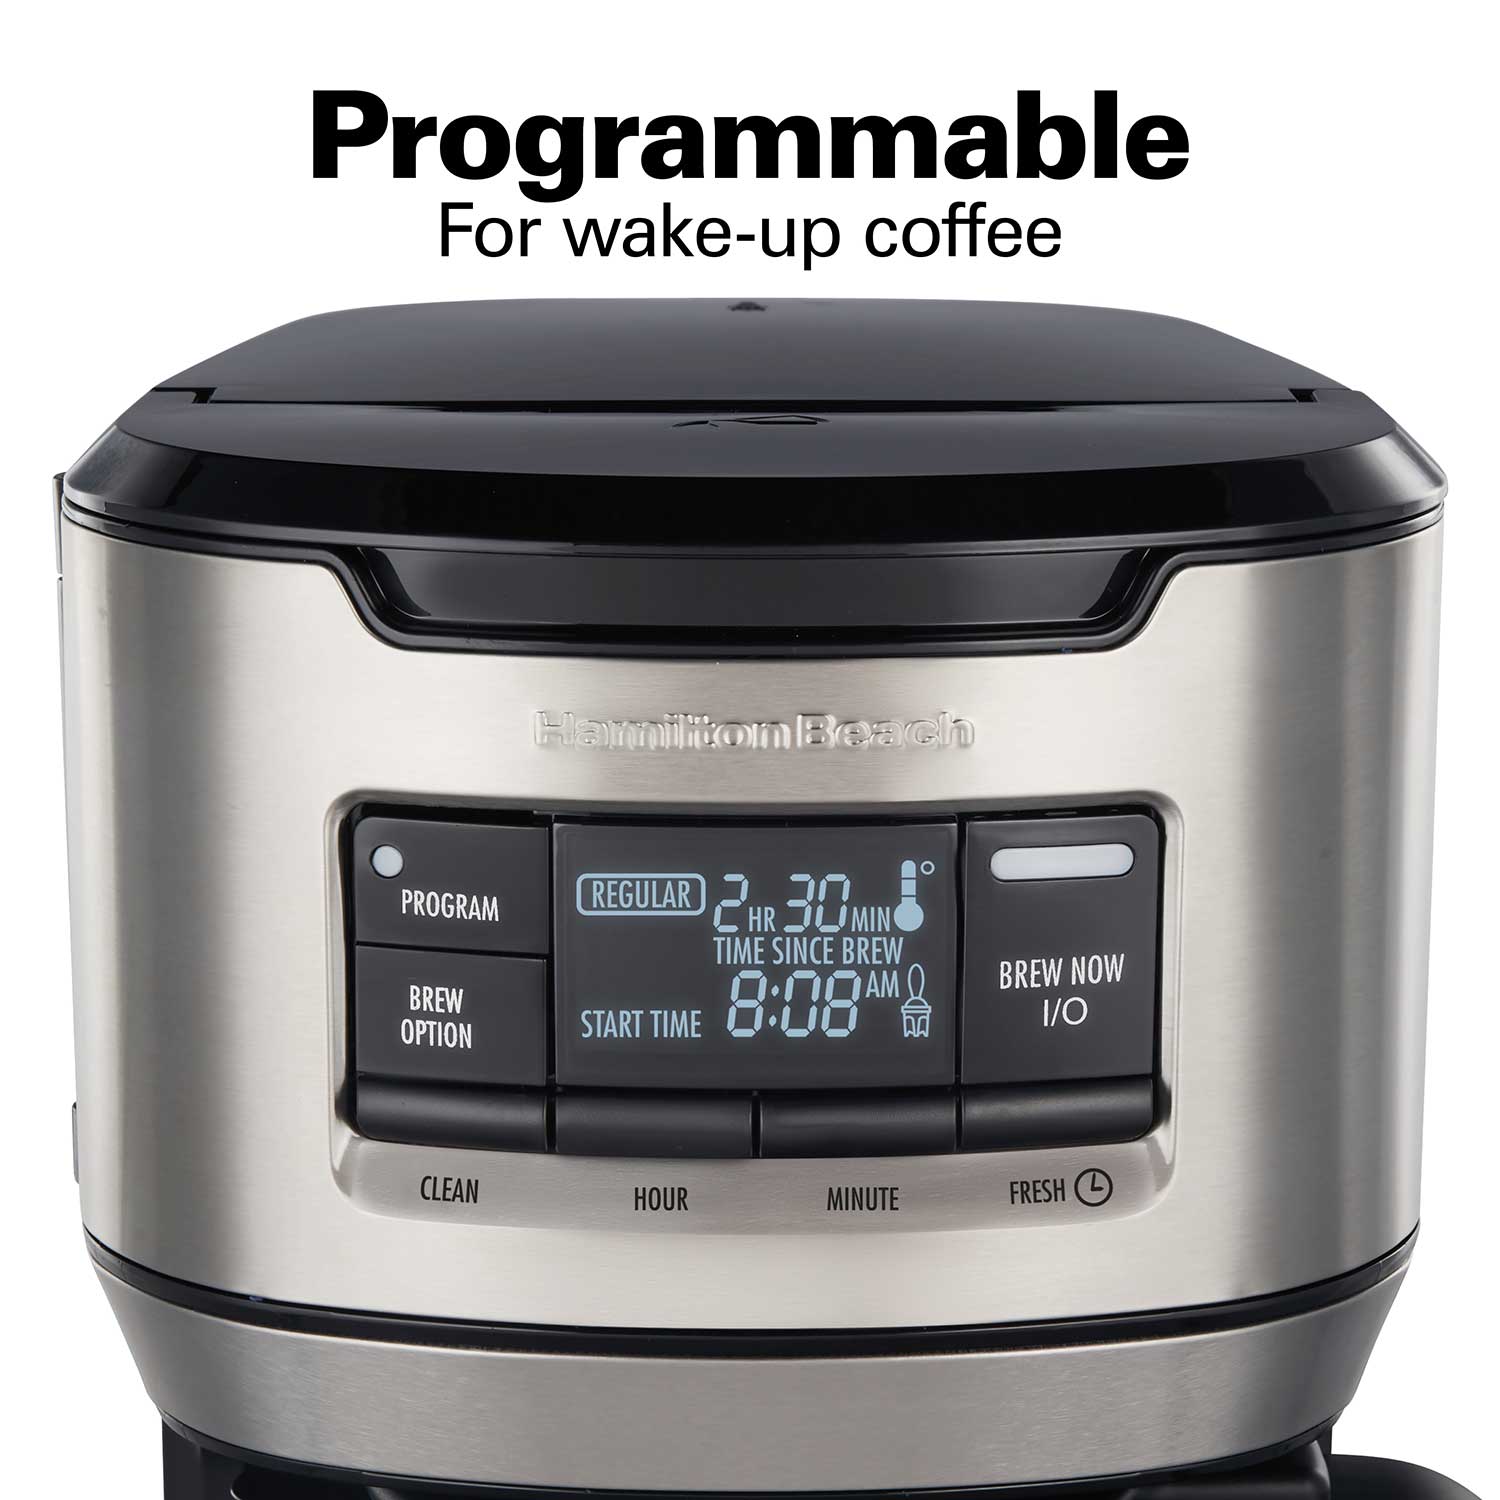 Hamilton Beach Programmable Front-Fill Coffee Maker - 9277618